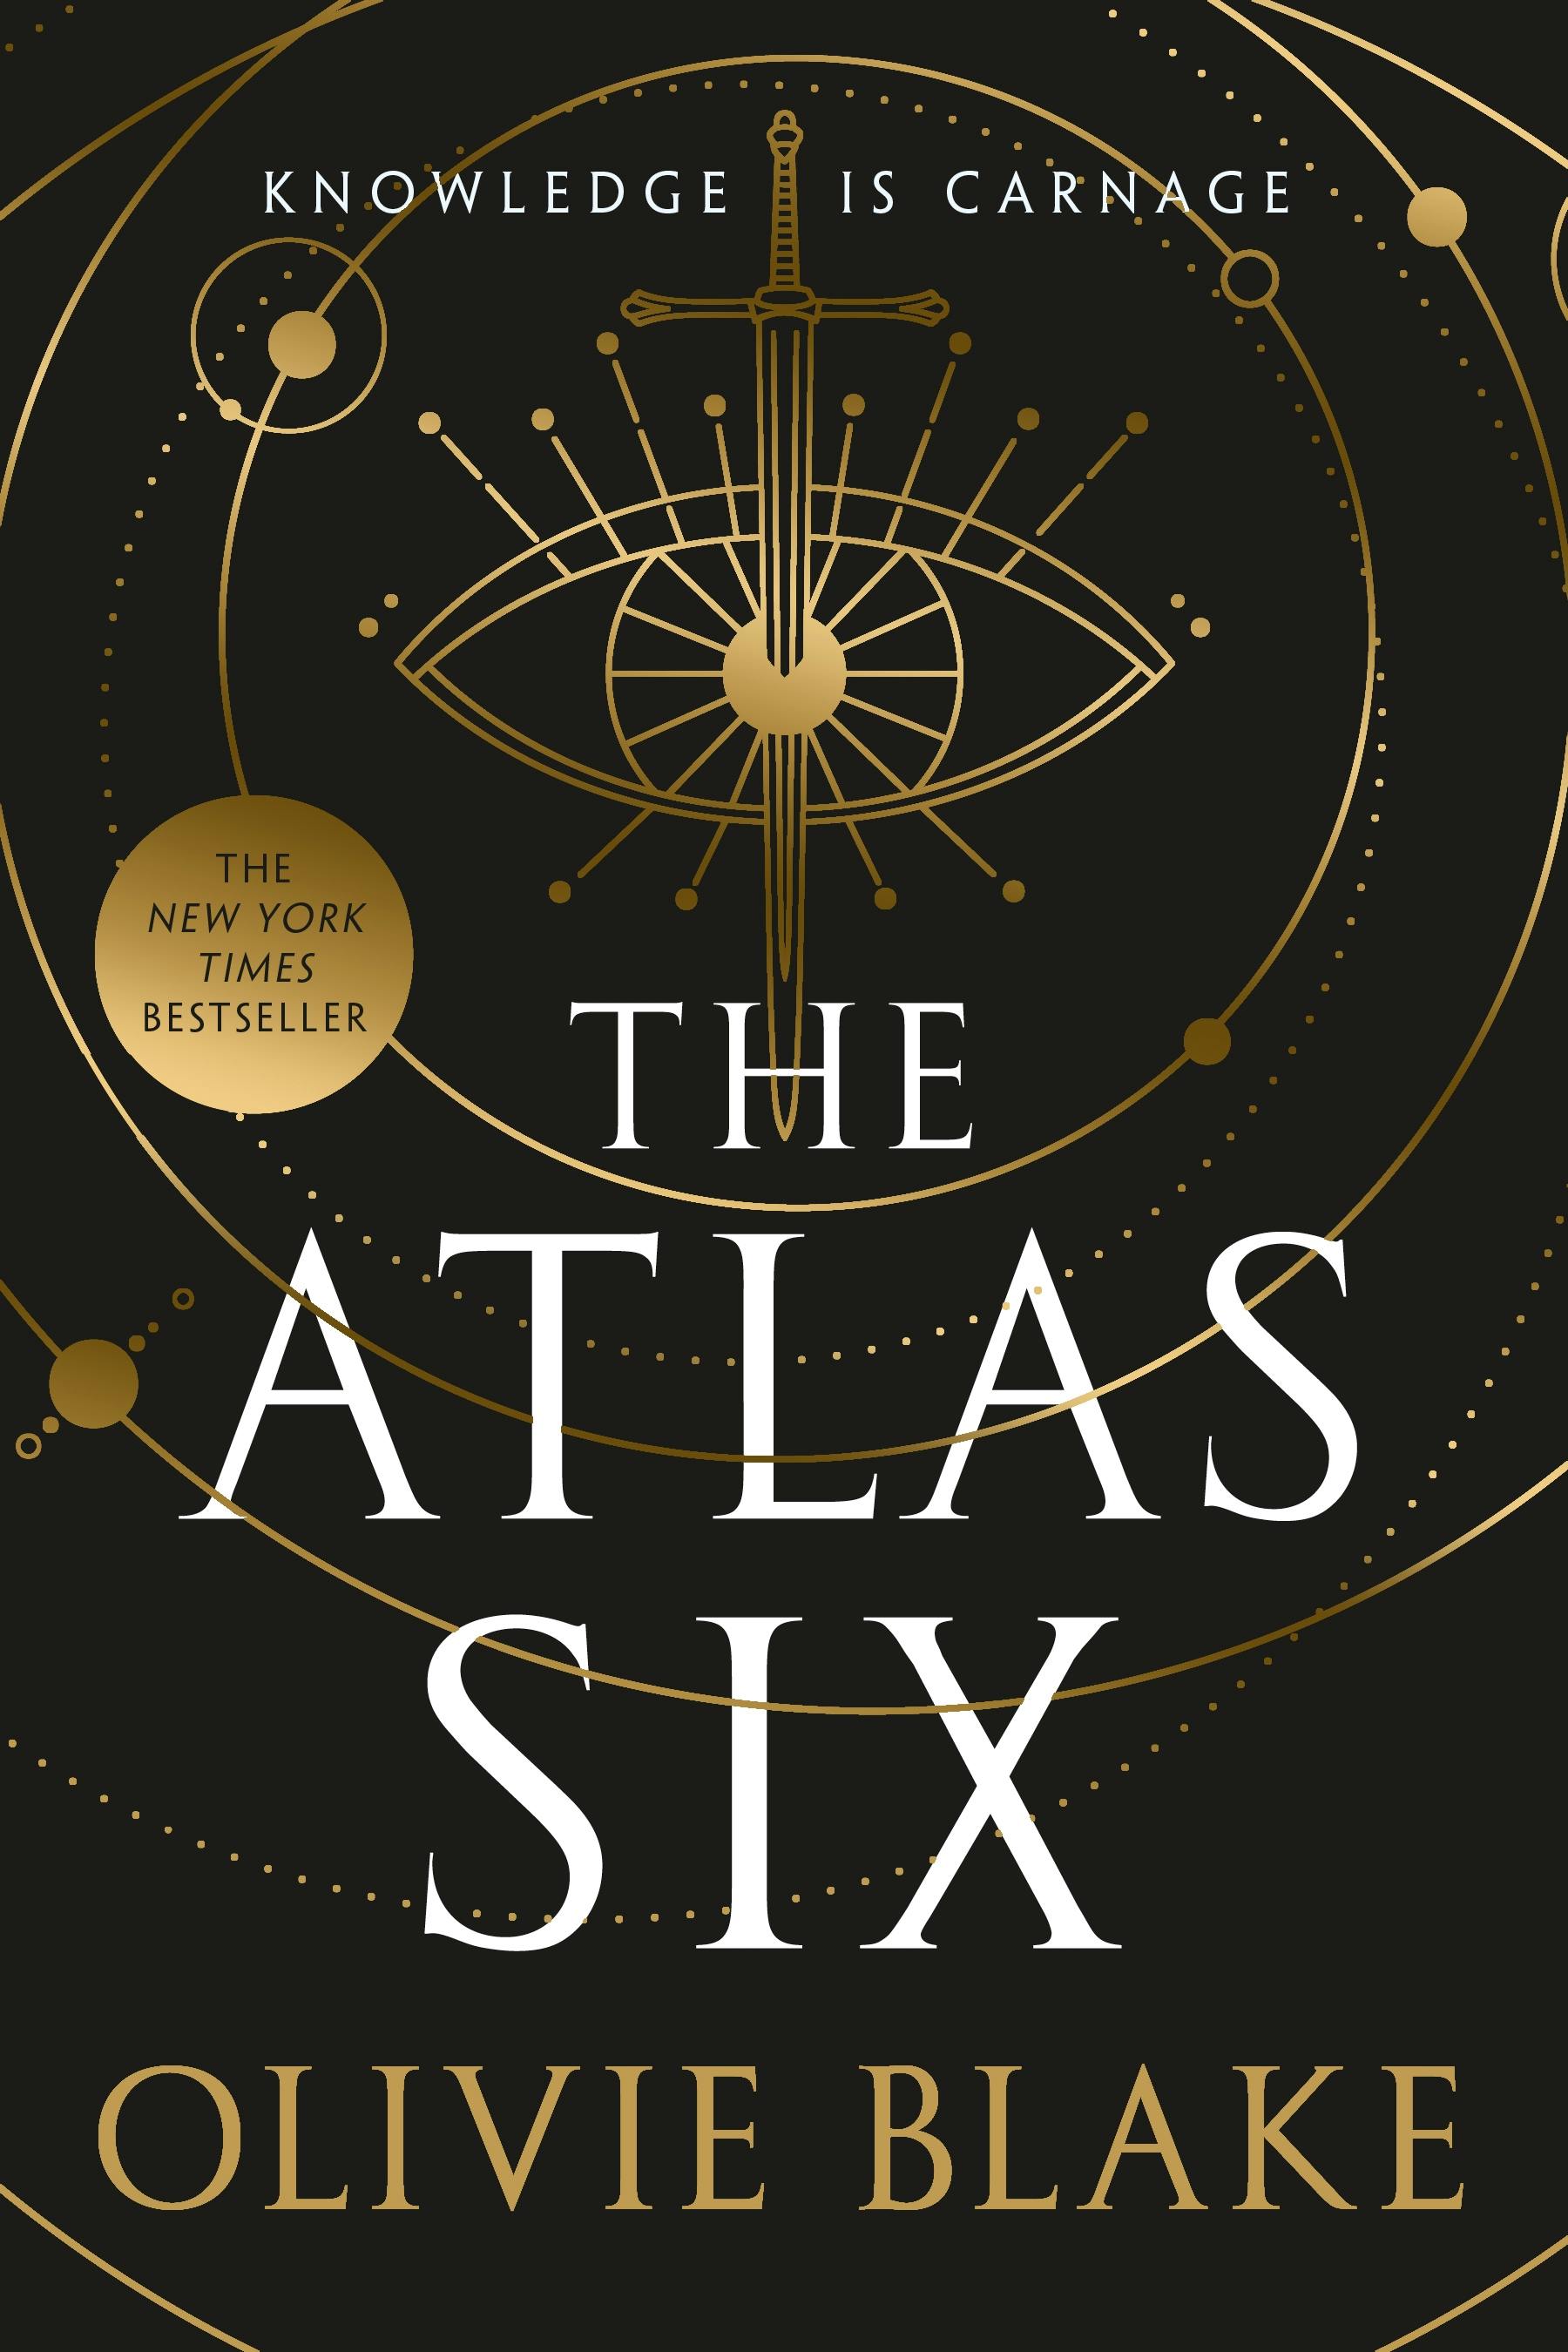 Image of The Atlas Six